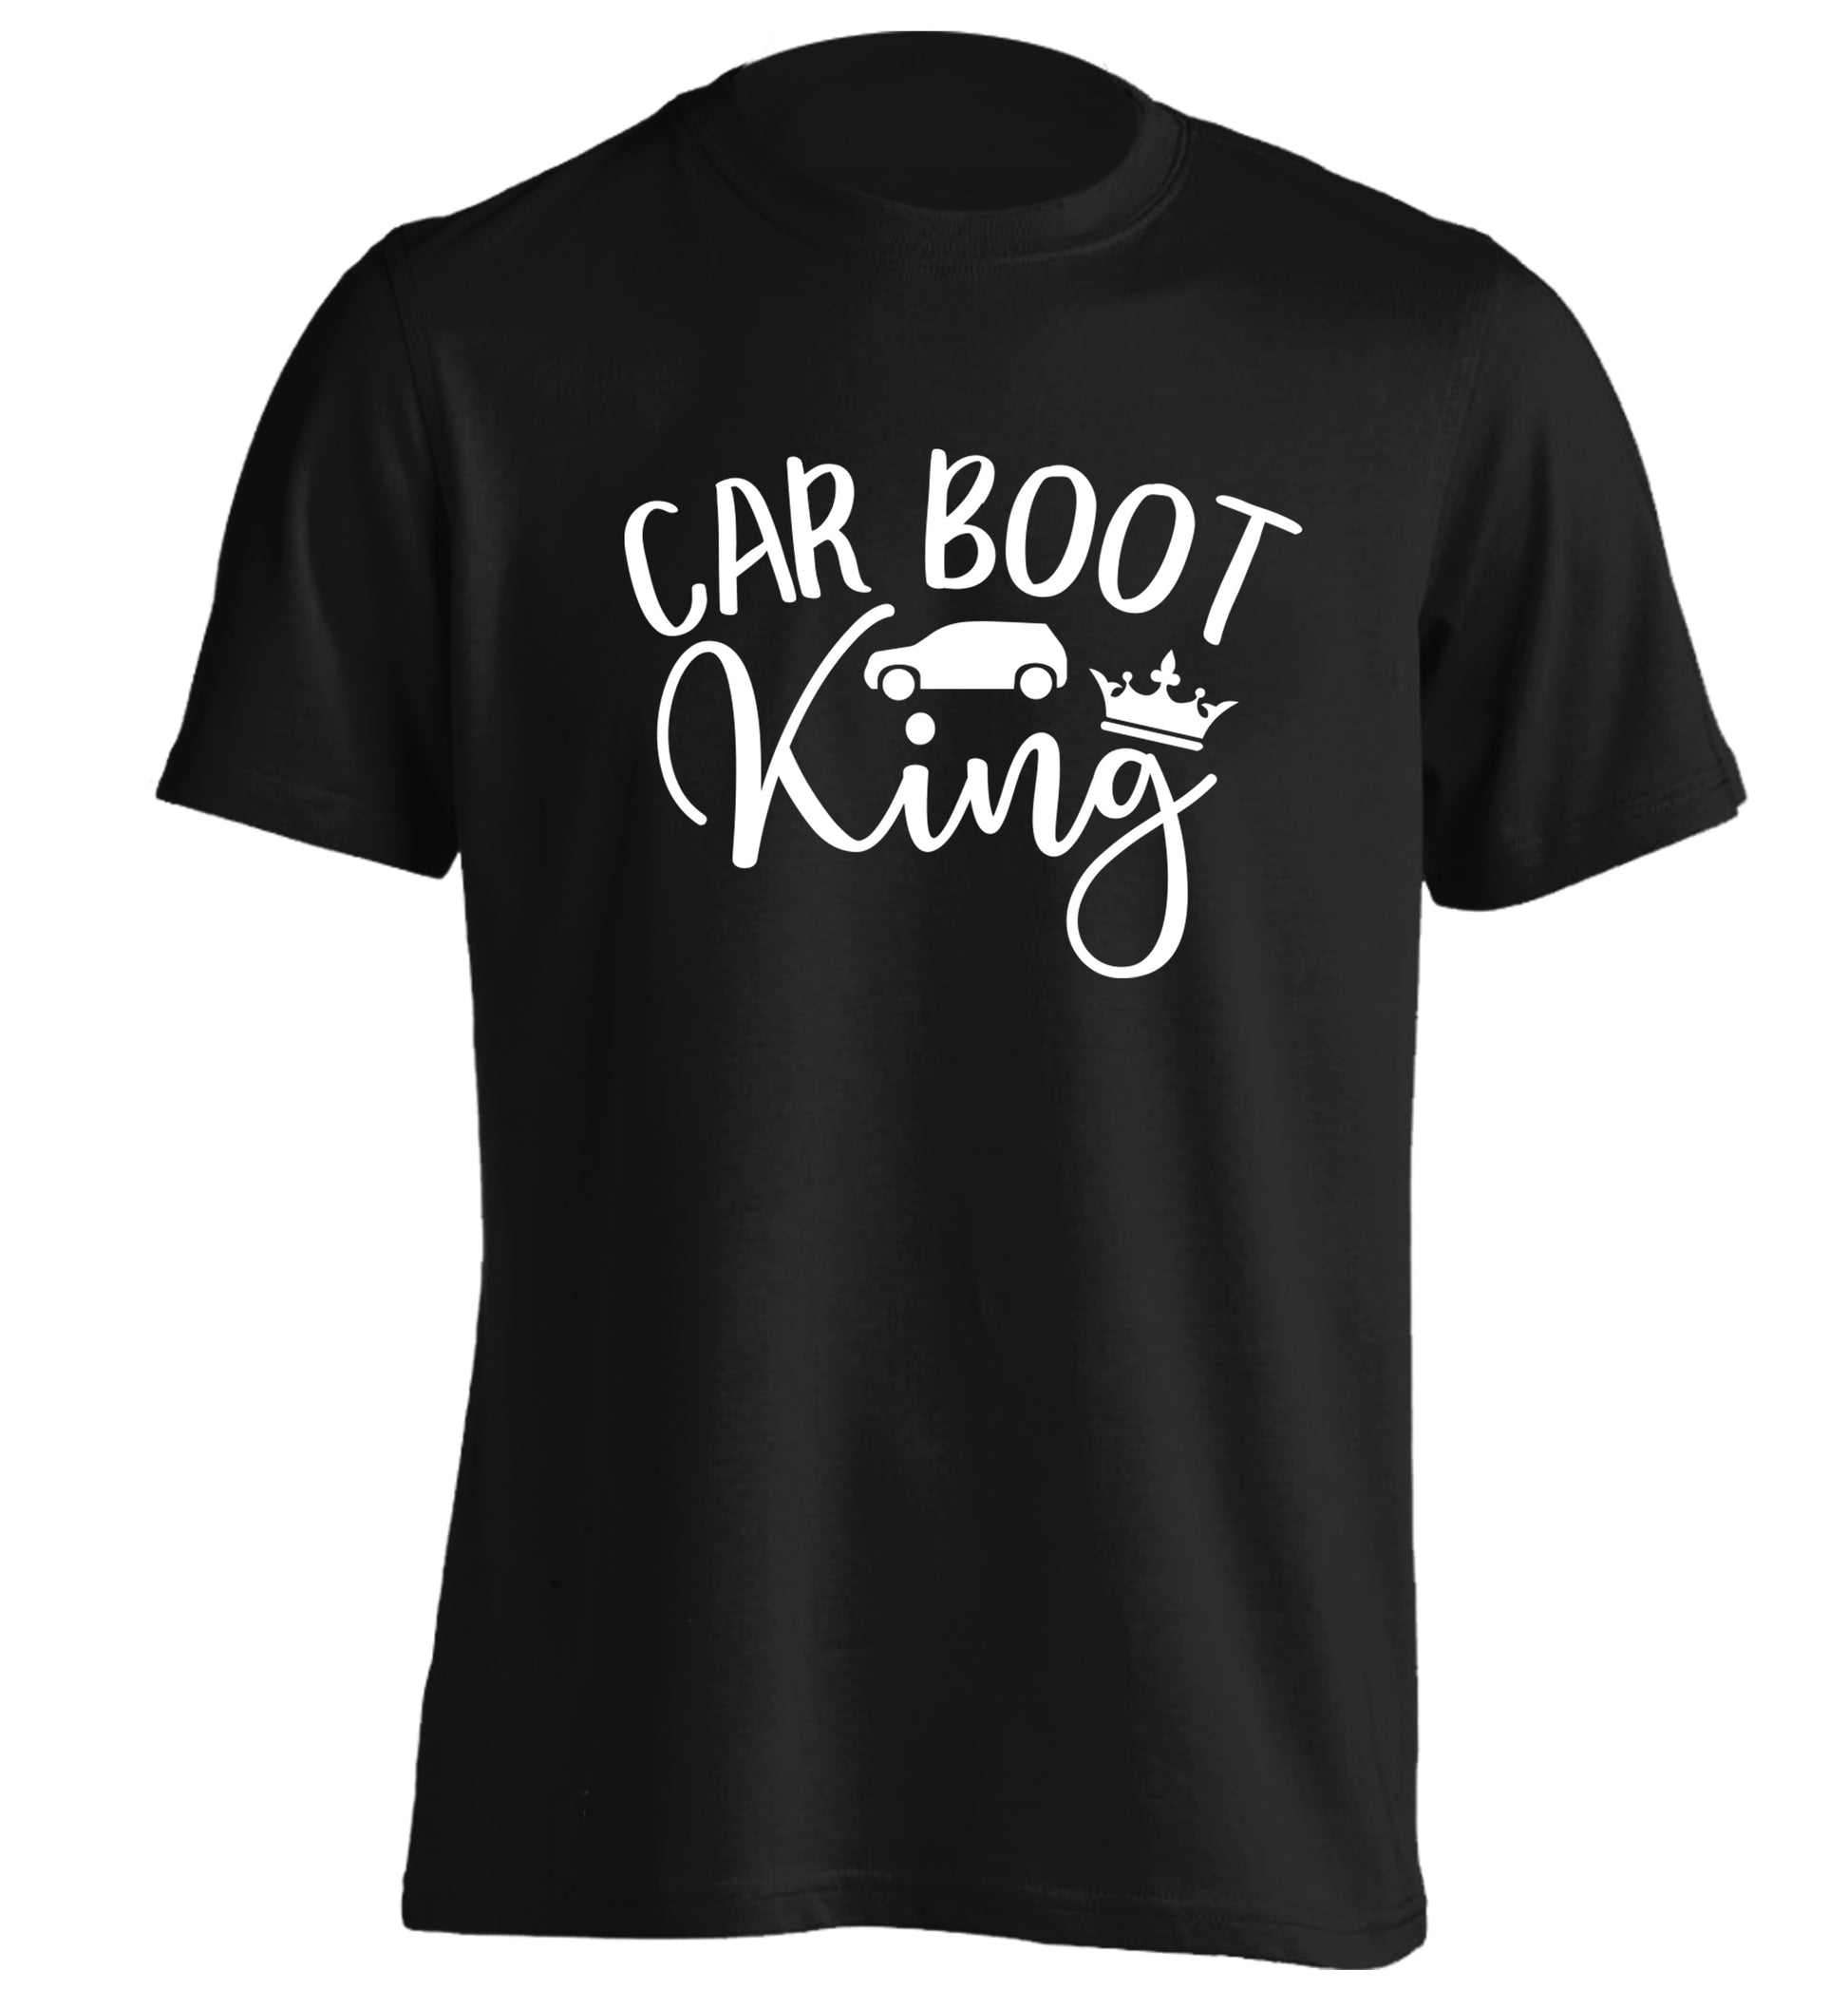 Carboot King adults unisex black Tshirt 2XL